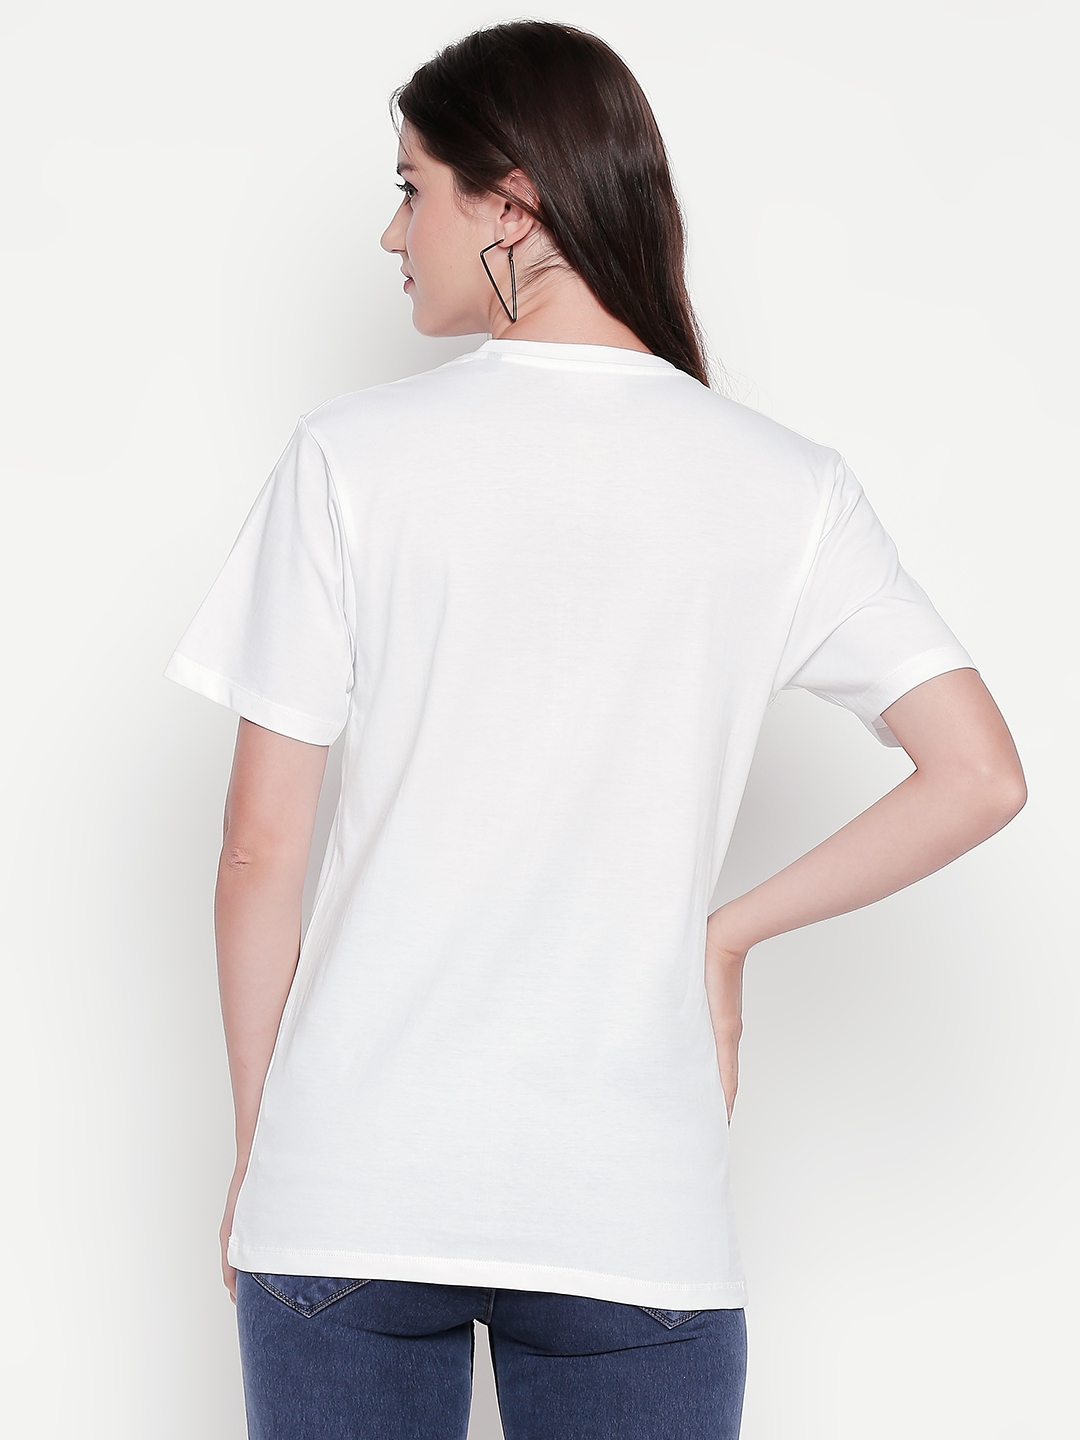 creativeideas.store | Pixel Heart White Tshirt 1